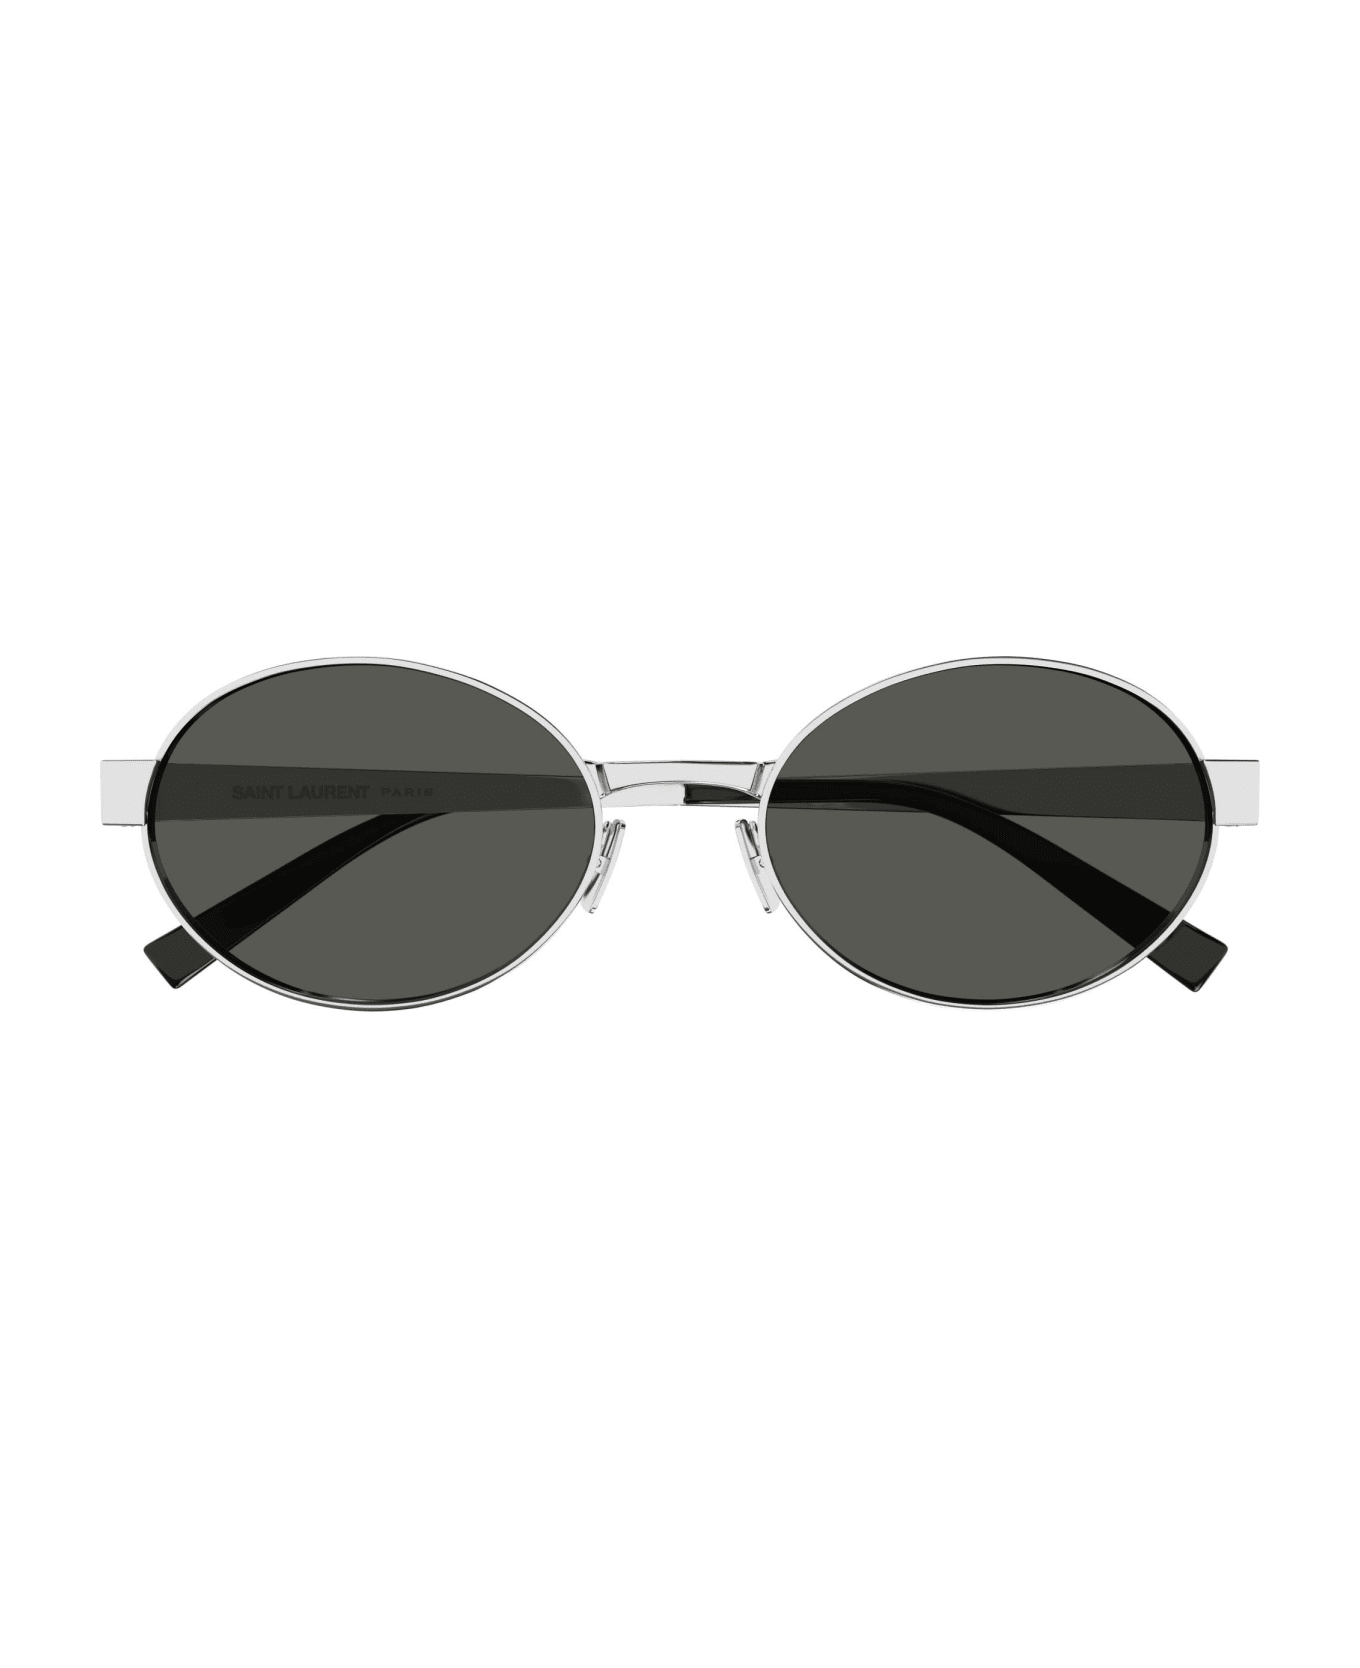 Saint Laurent Eyewear Sunglasses - Silver/Grigio サングラス